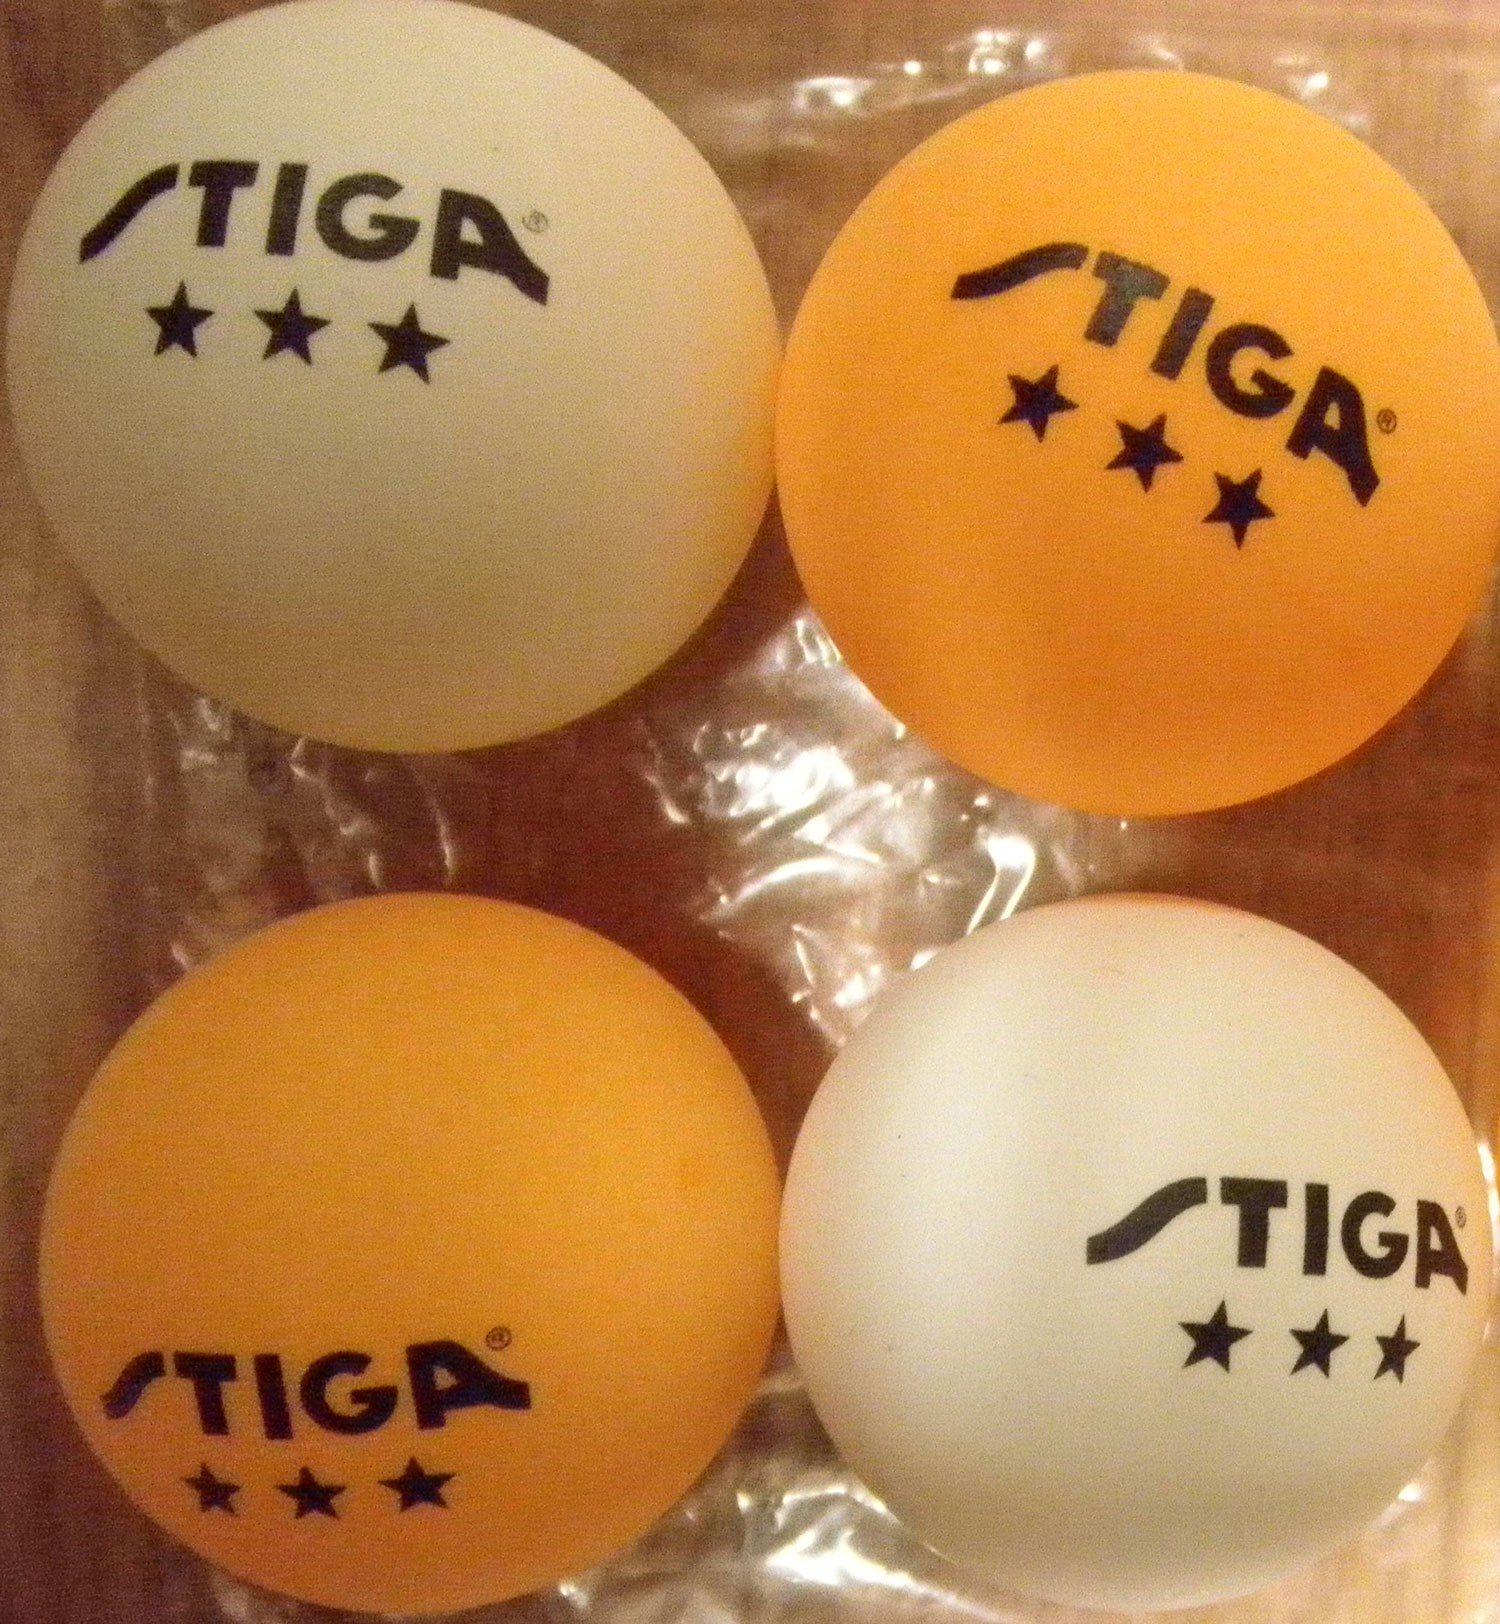 Ping Pong Balls Table Tennis Balls Set Of 6 3 Star Stiga Balls